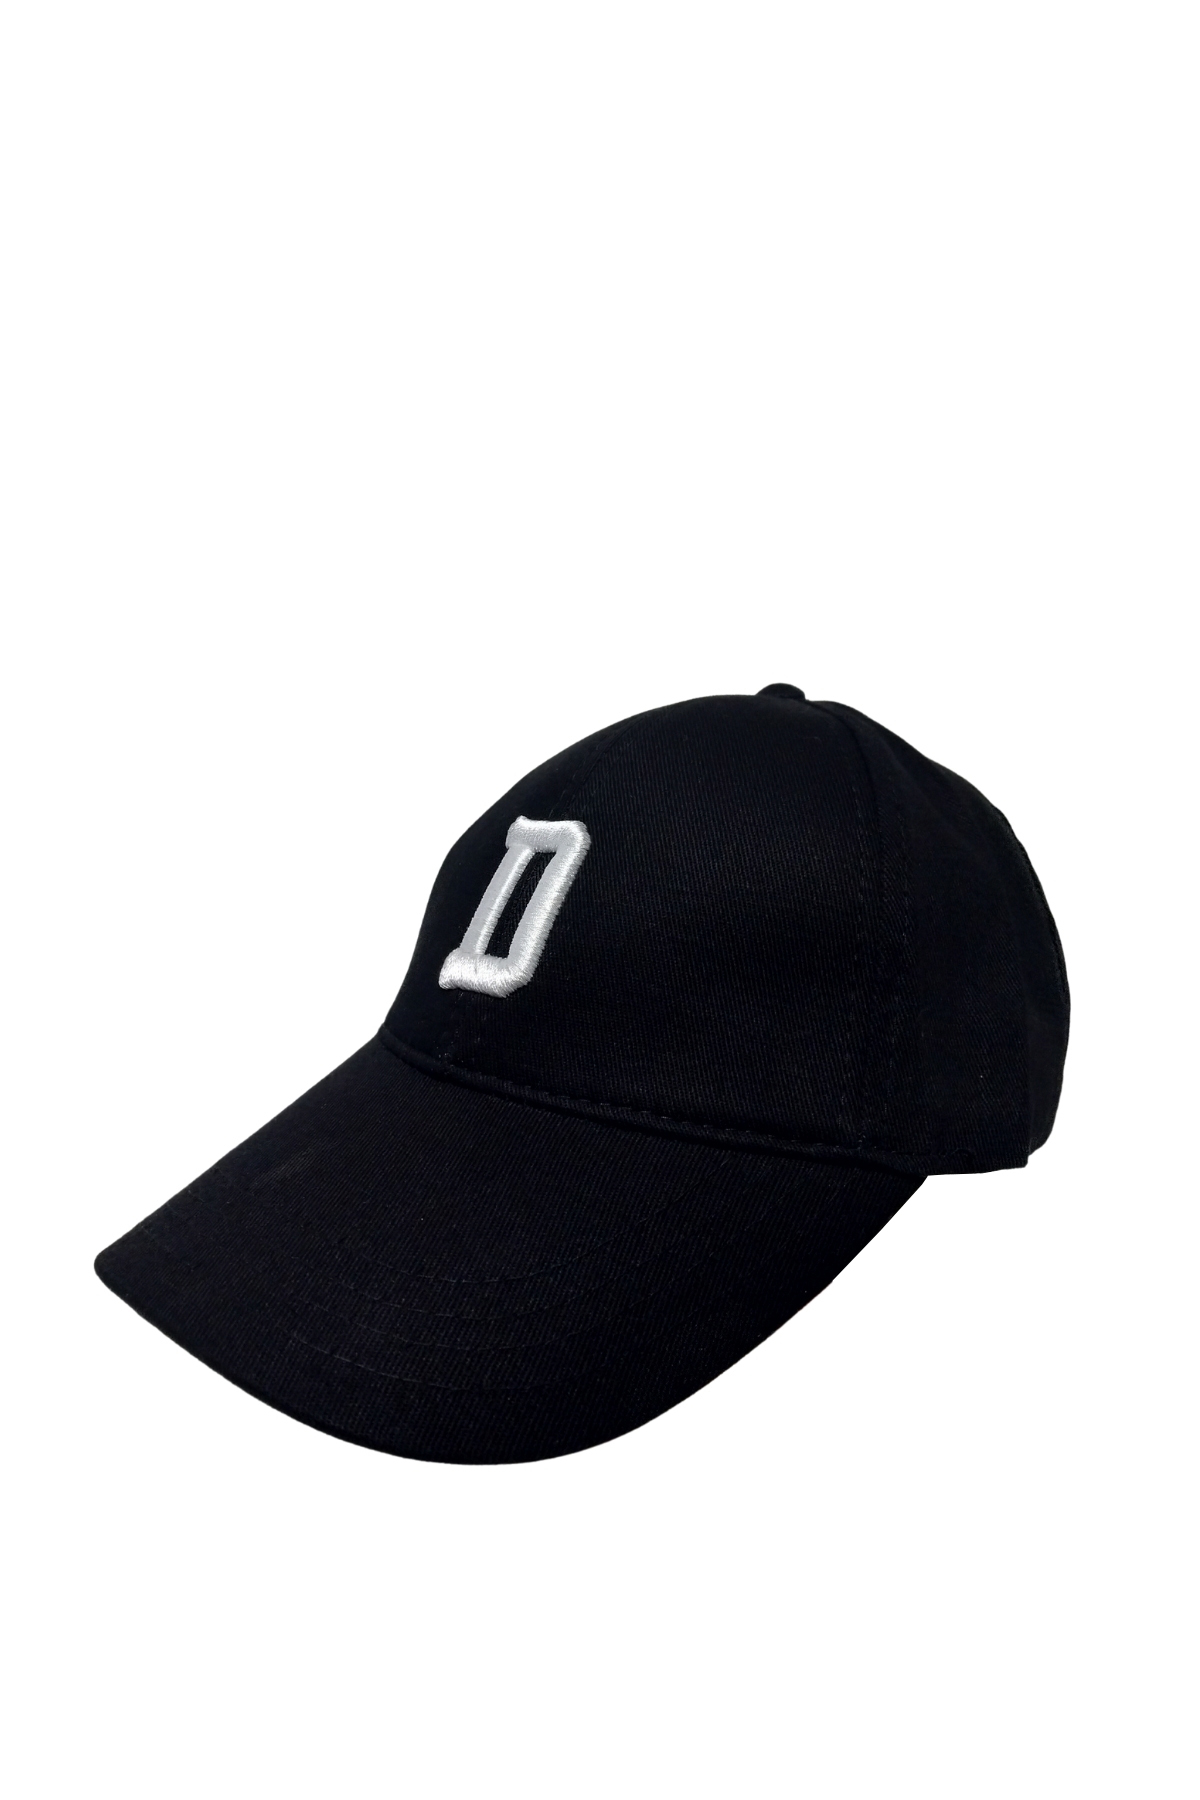 Syt 220 - D Harfli Siyah Şapka